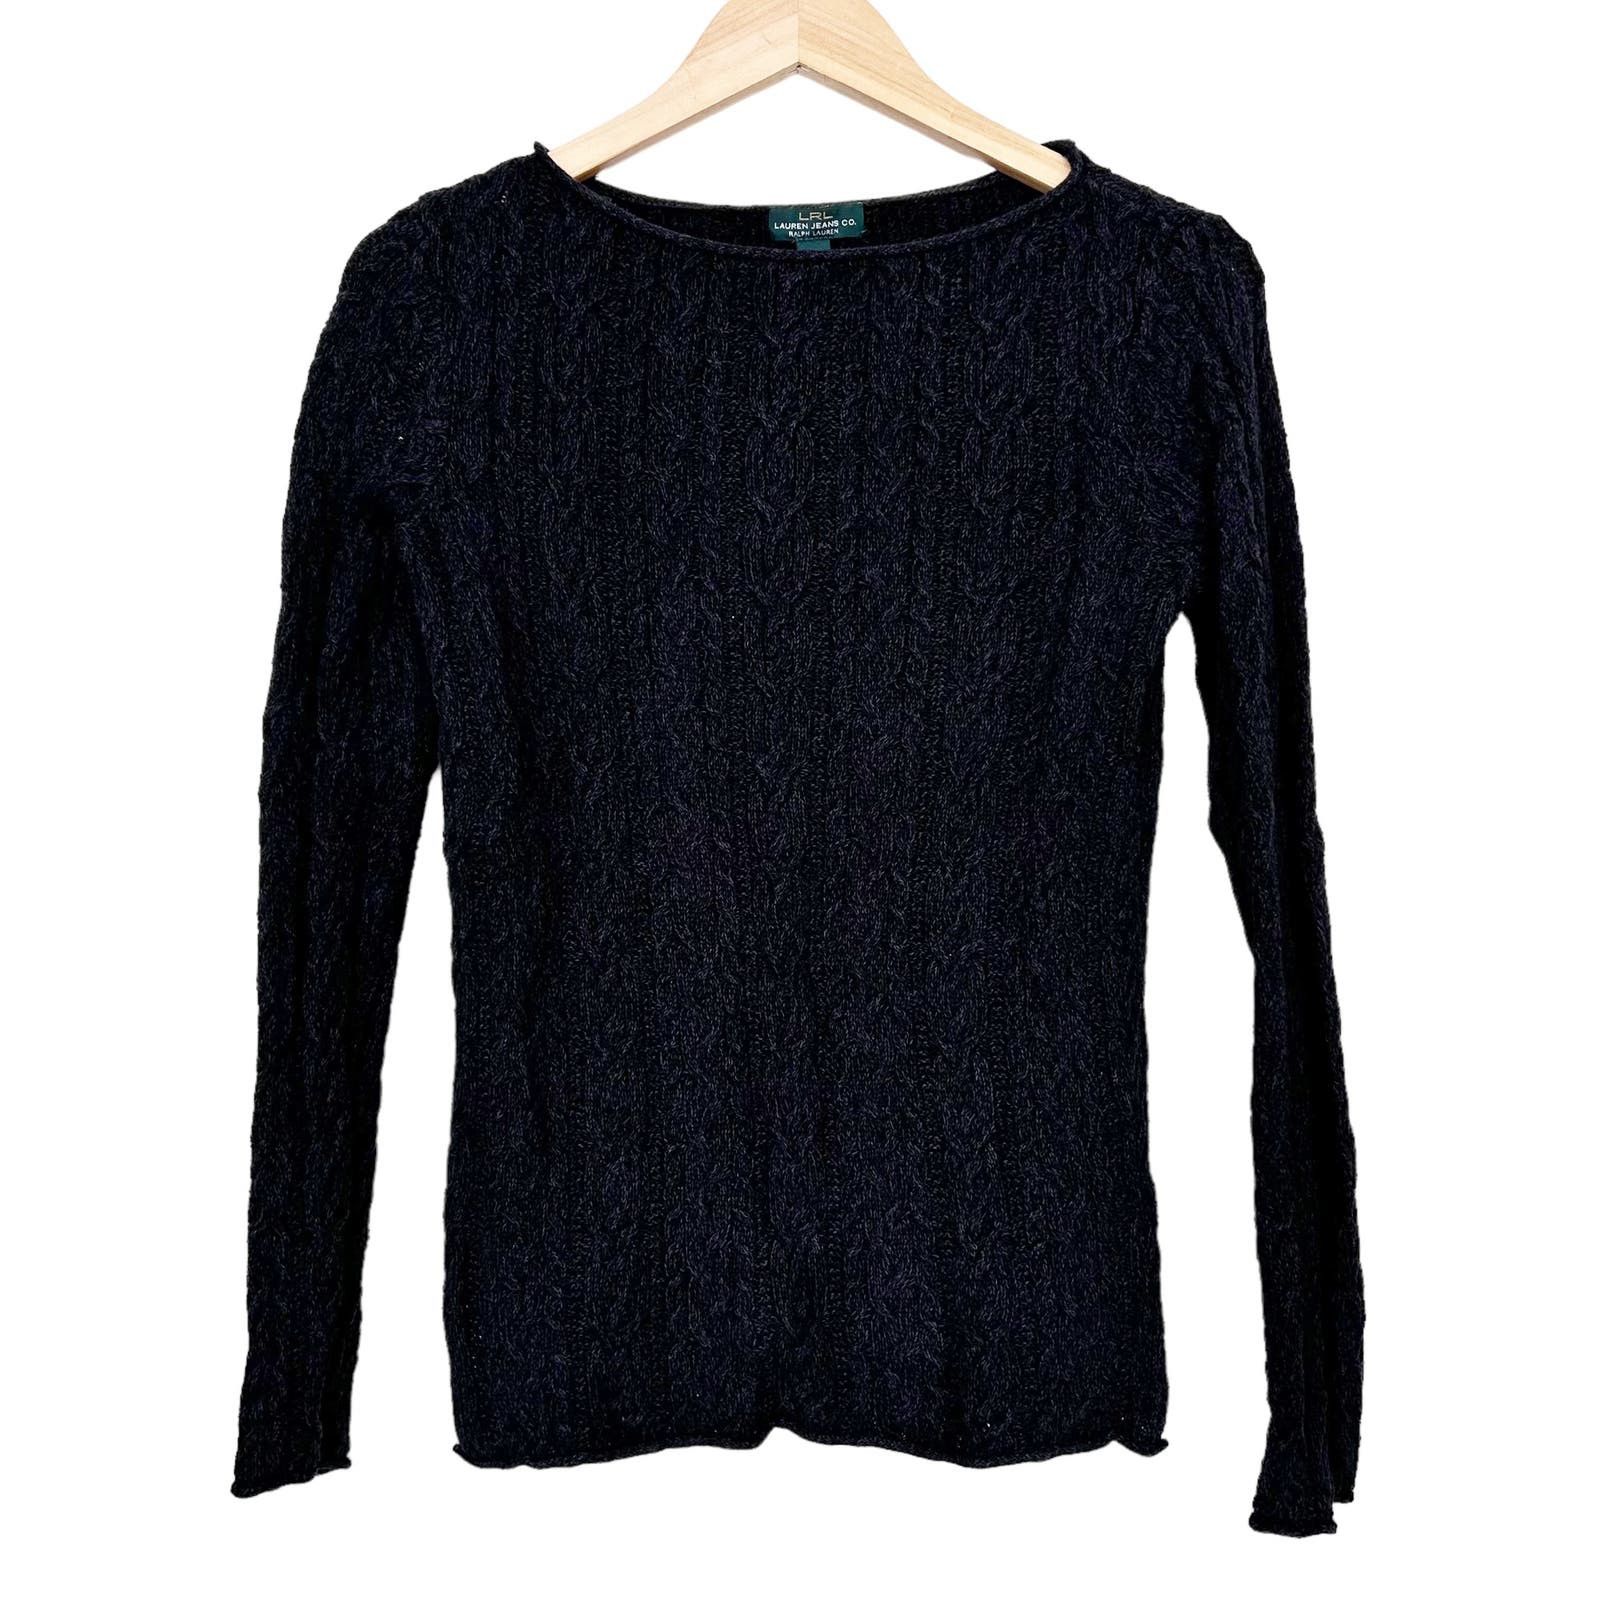 Ralph Lauren LRL Ralph Lauren Dark Gray Cable Knit Sweater Sz S Size S / US 4 / IT 40 - 5 Preview